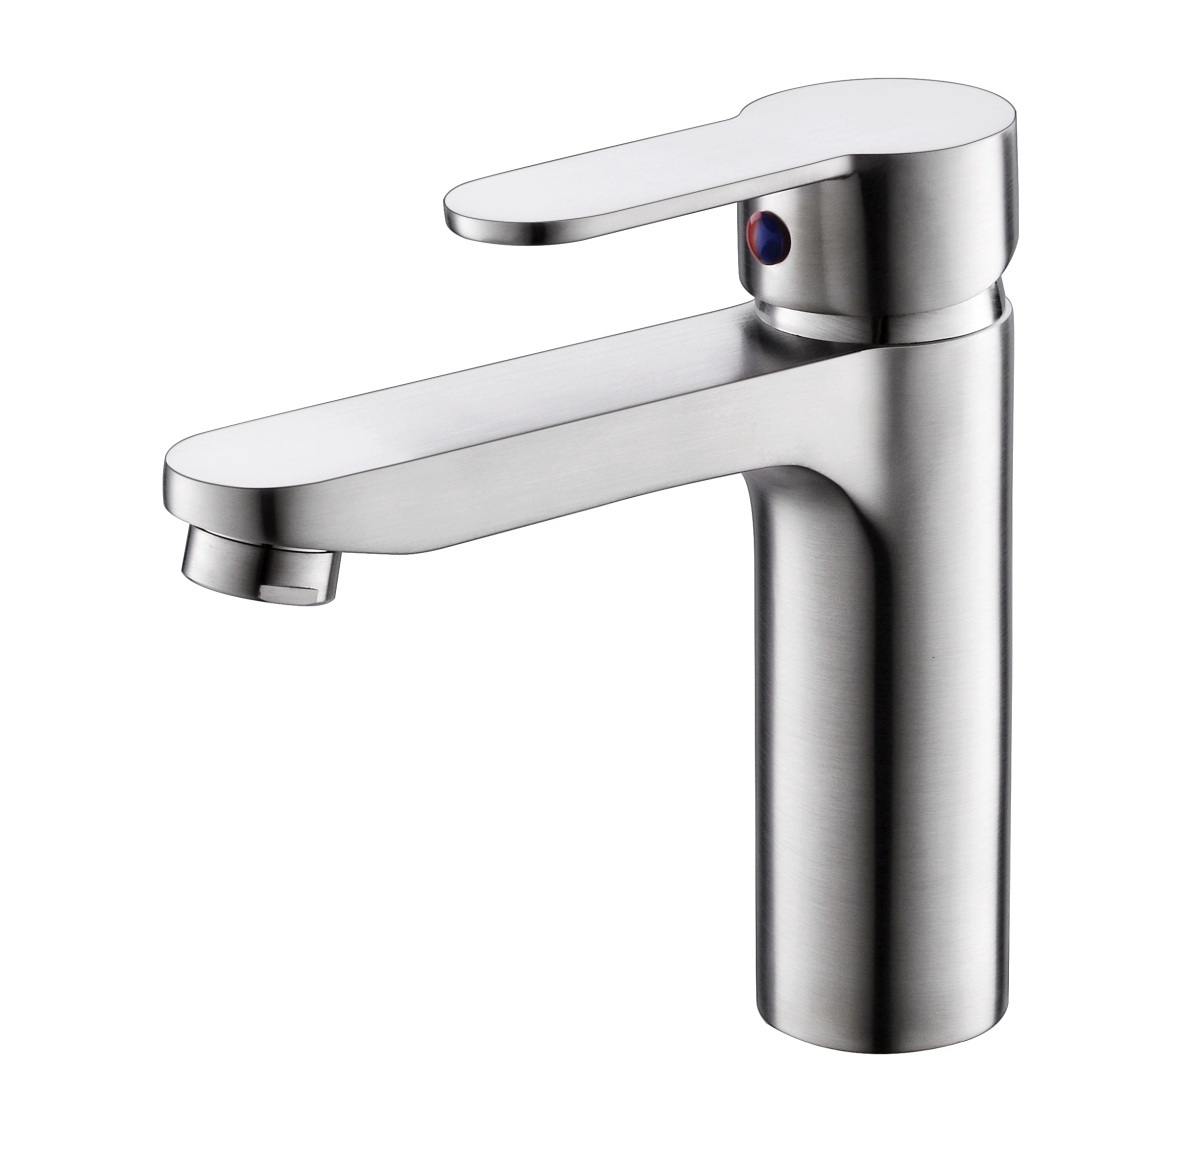 F40004bn Bathroom Vessel Faucet, Brush Nickel - 6.3 X 6.3 X 1.7 In.